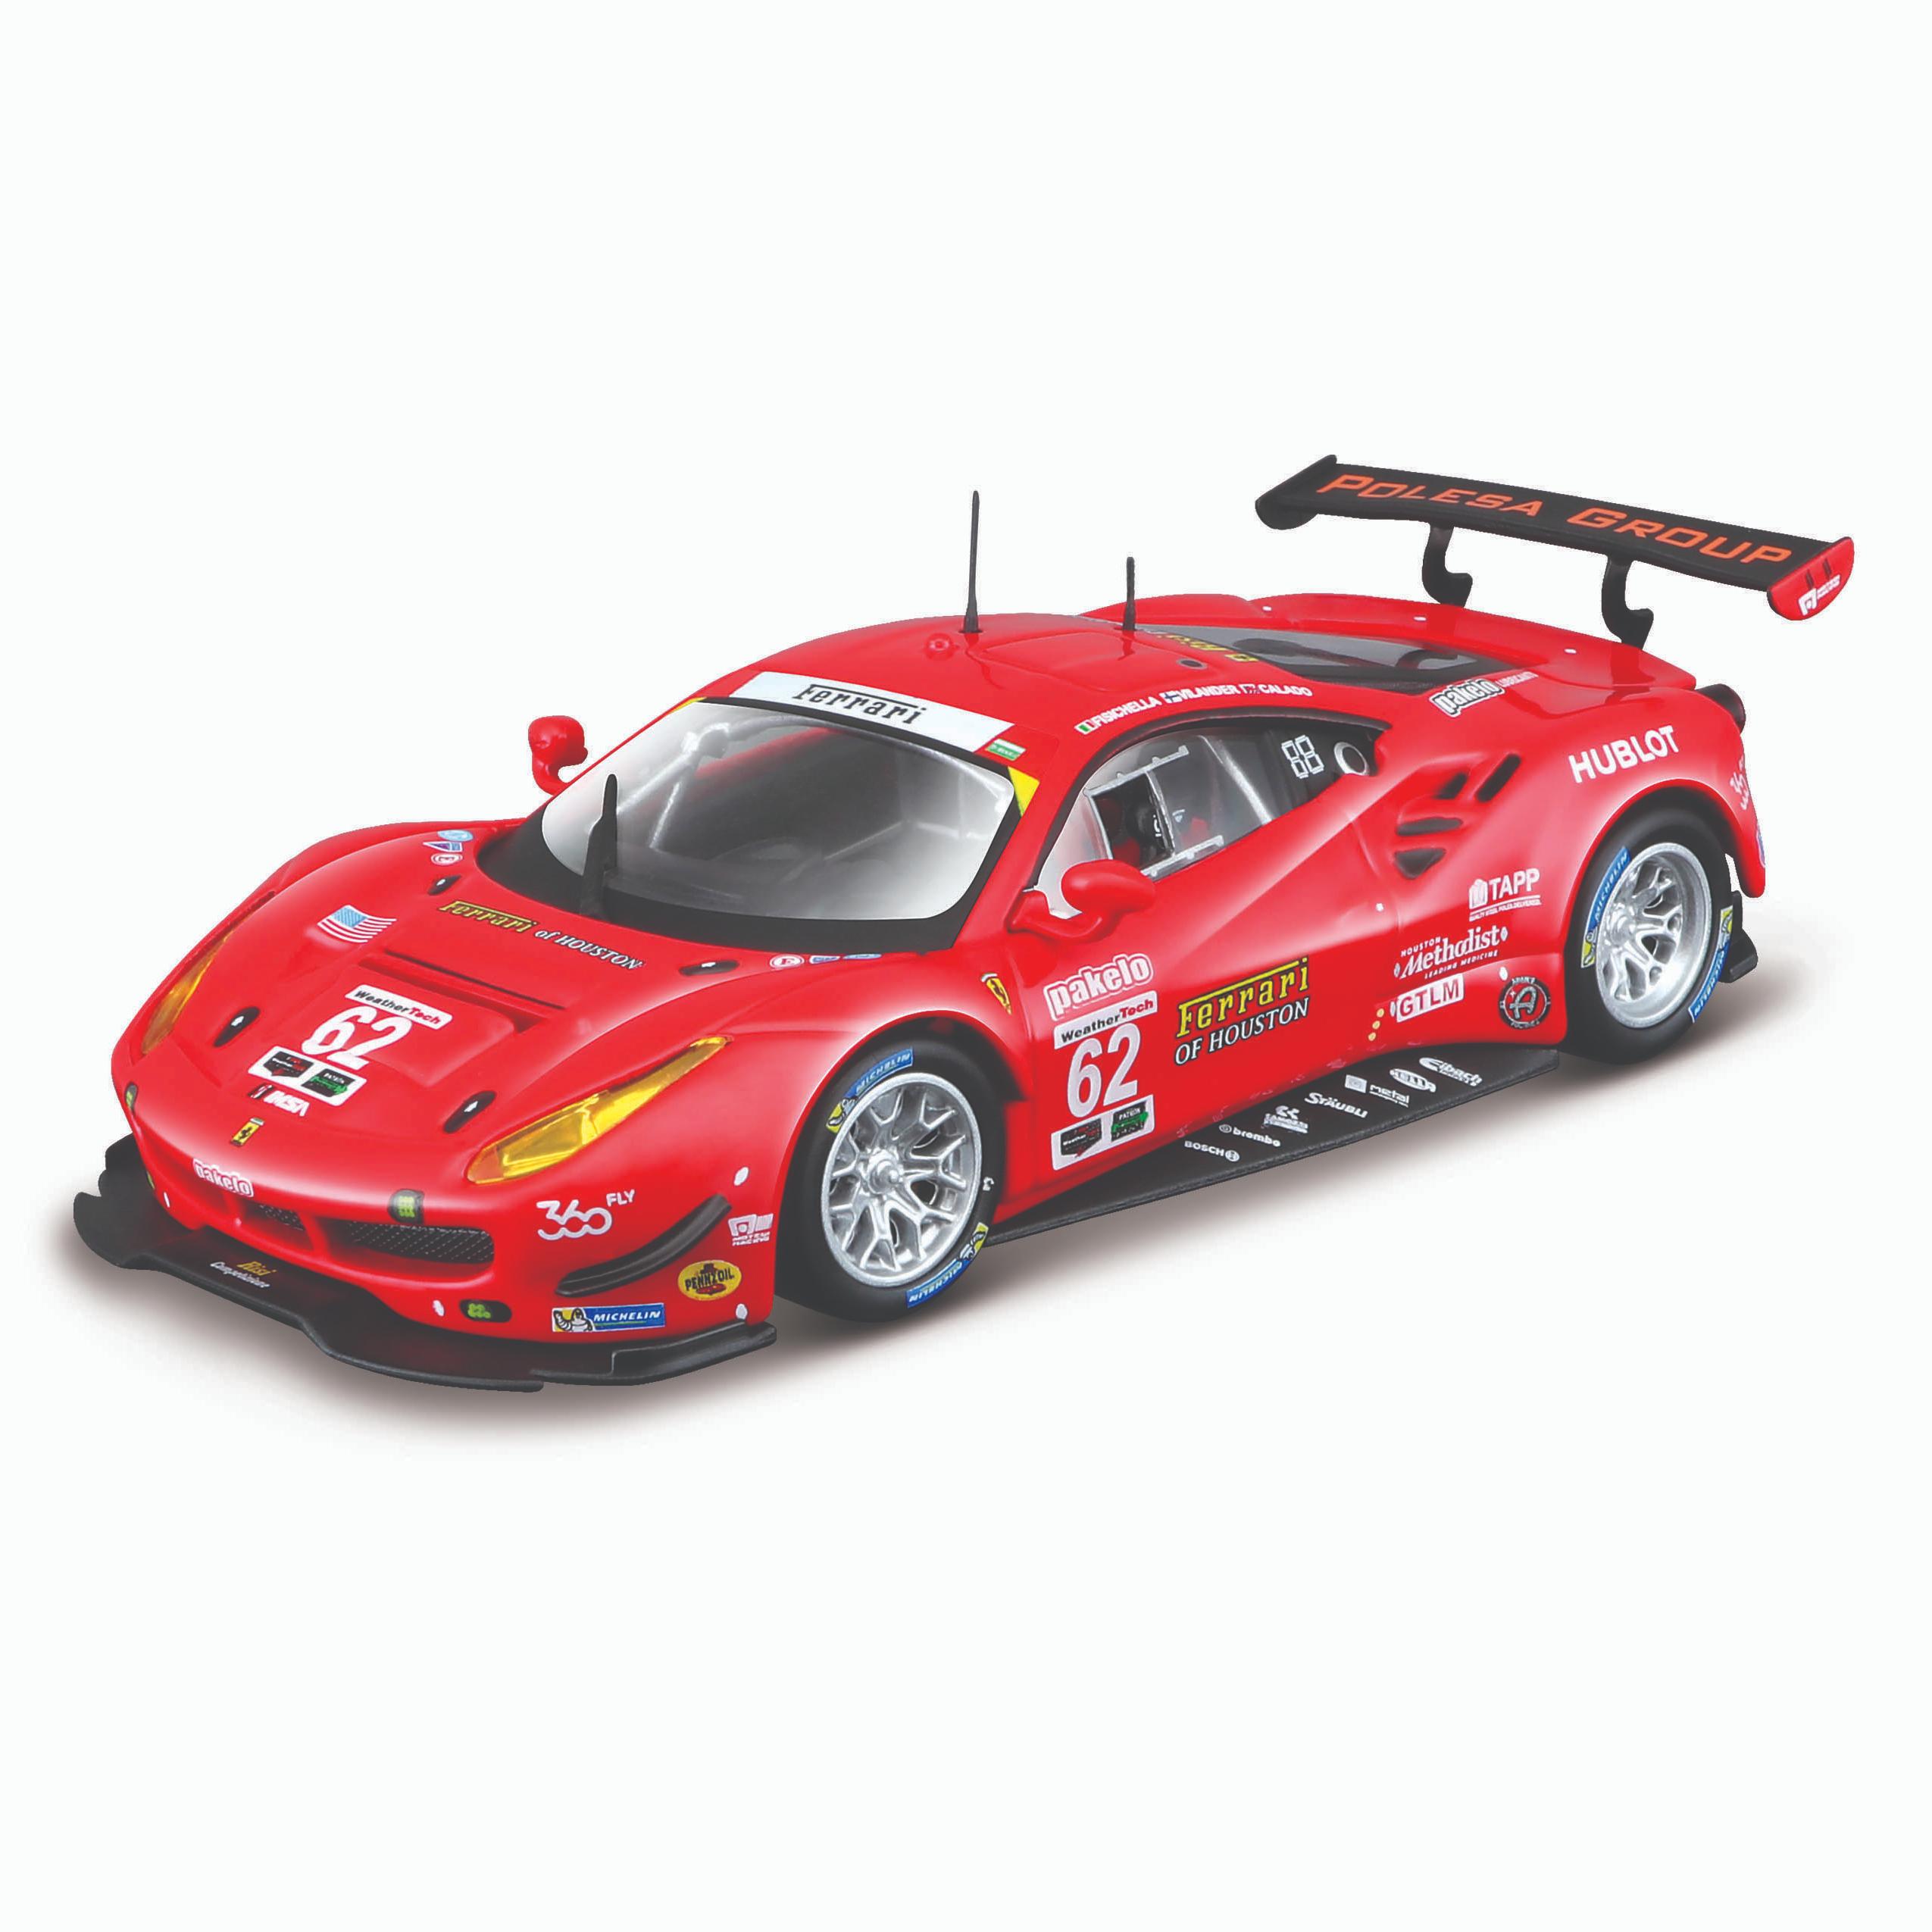 Коллекционная машинка Bburago Феррари 1:43 Ferrari Racing 488 GTE 2017,красная bburago 1 24 scale porsche 718 boxster alloy racing car alloy luxury vehicle diecast cars model toy collection gift